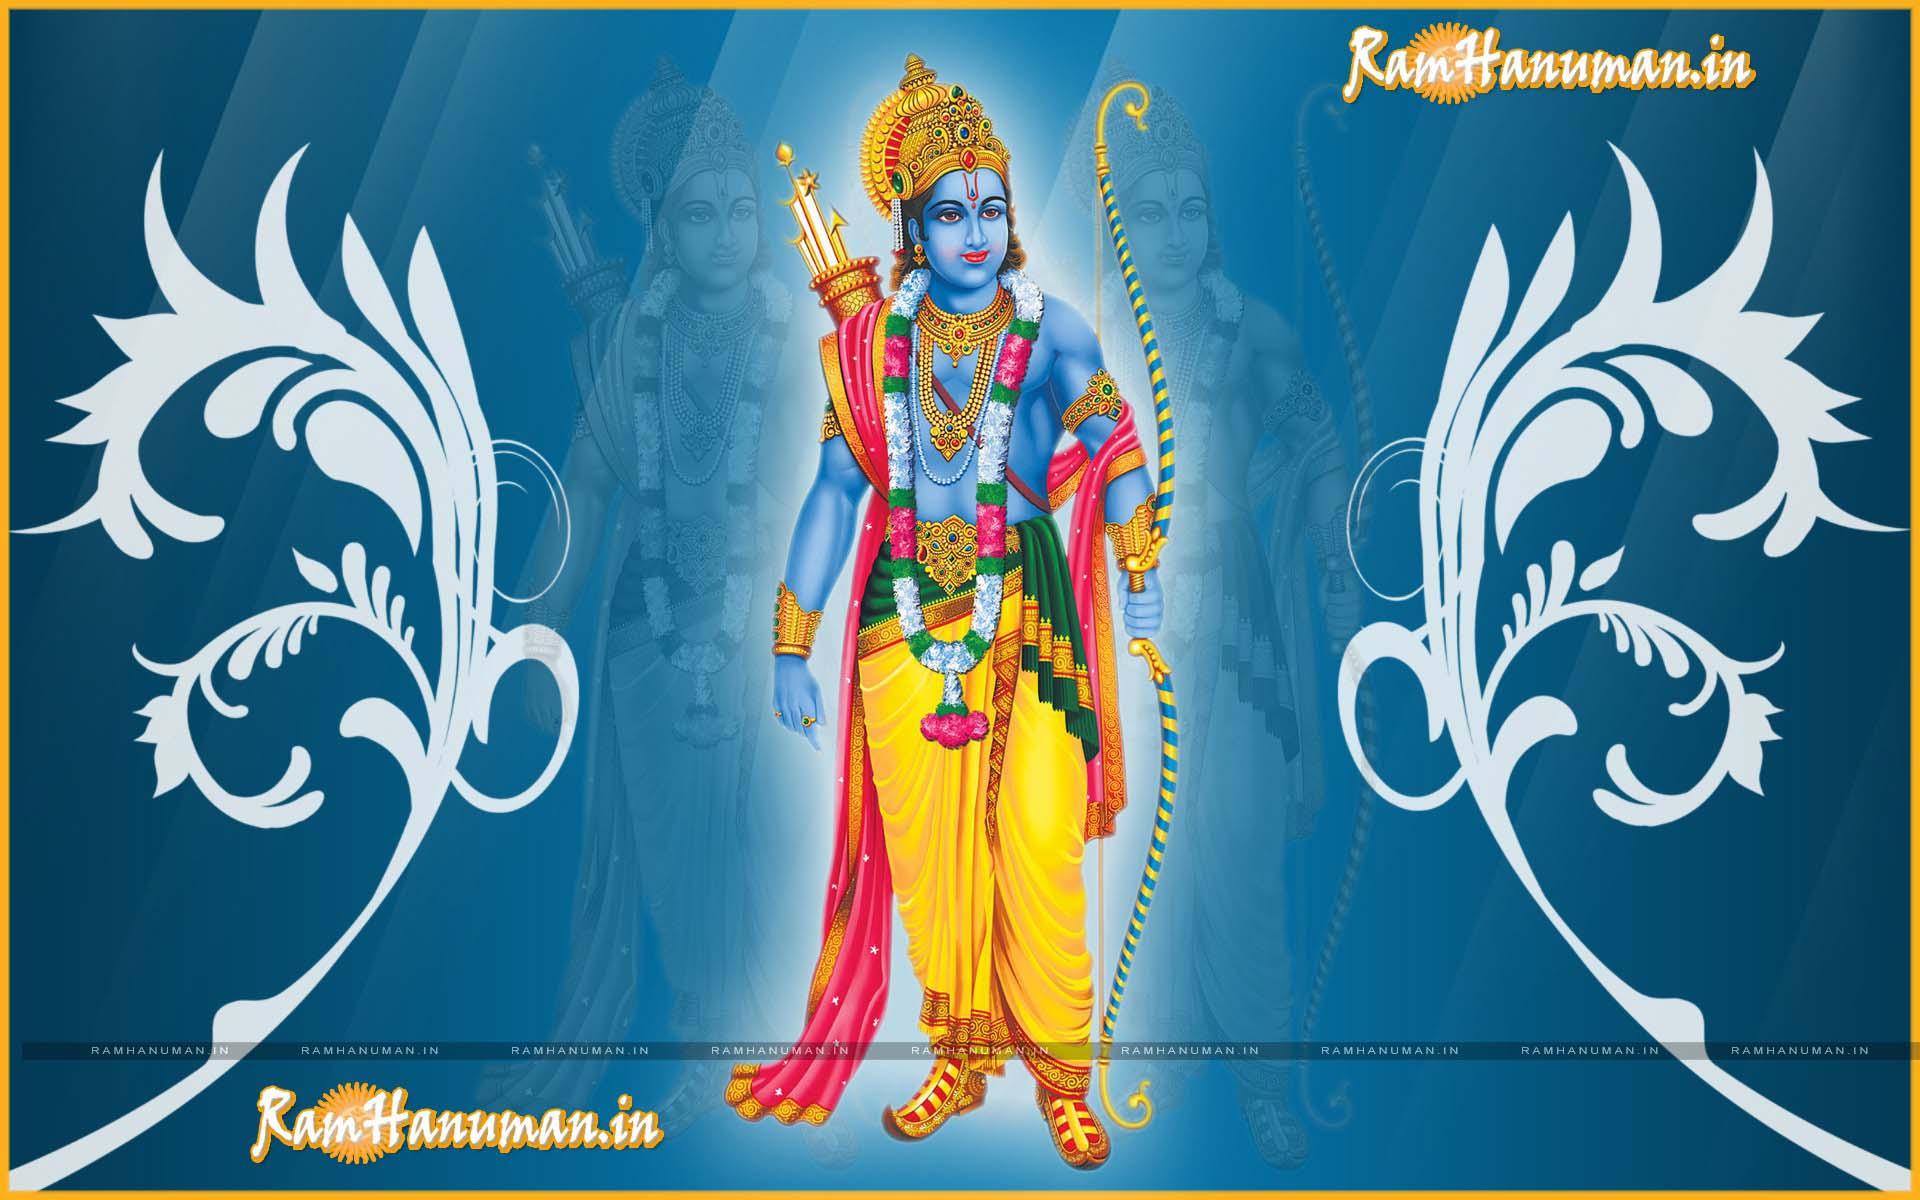 Ram ji image & wallpaper free download for desktop